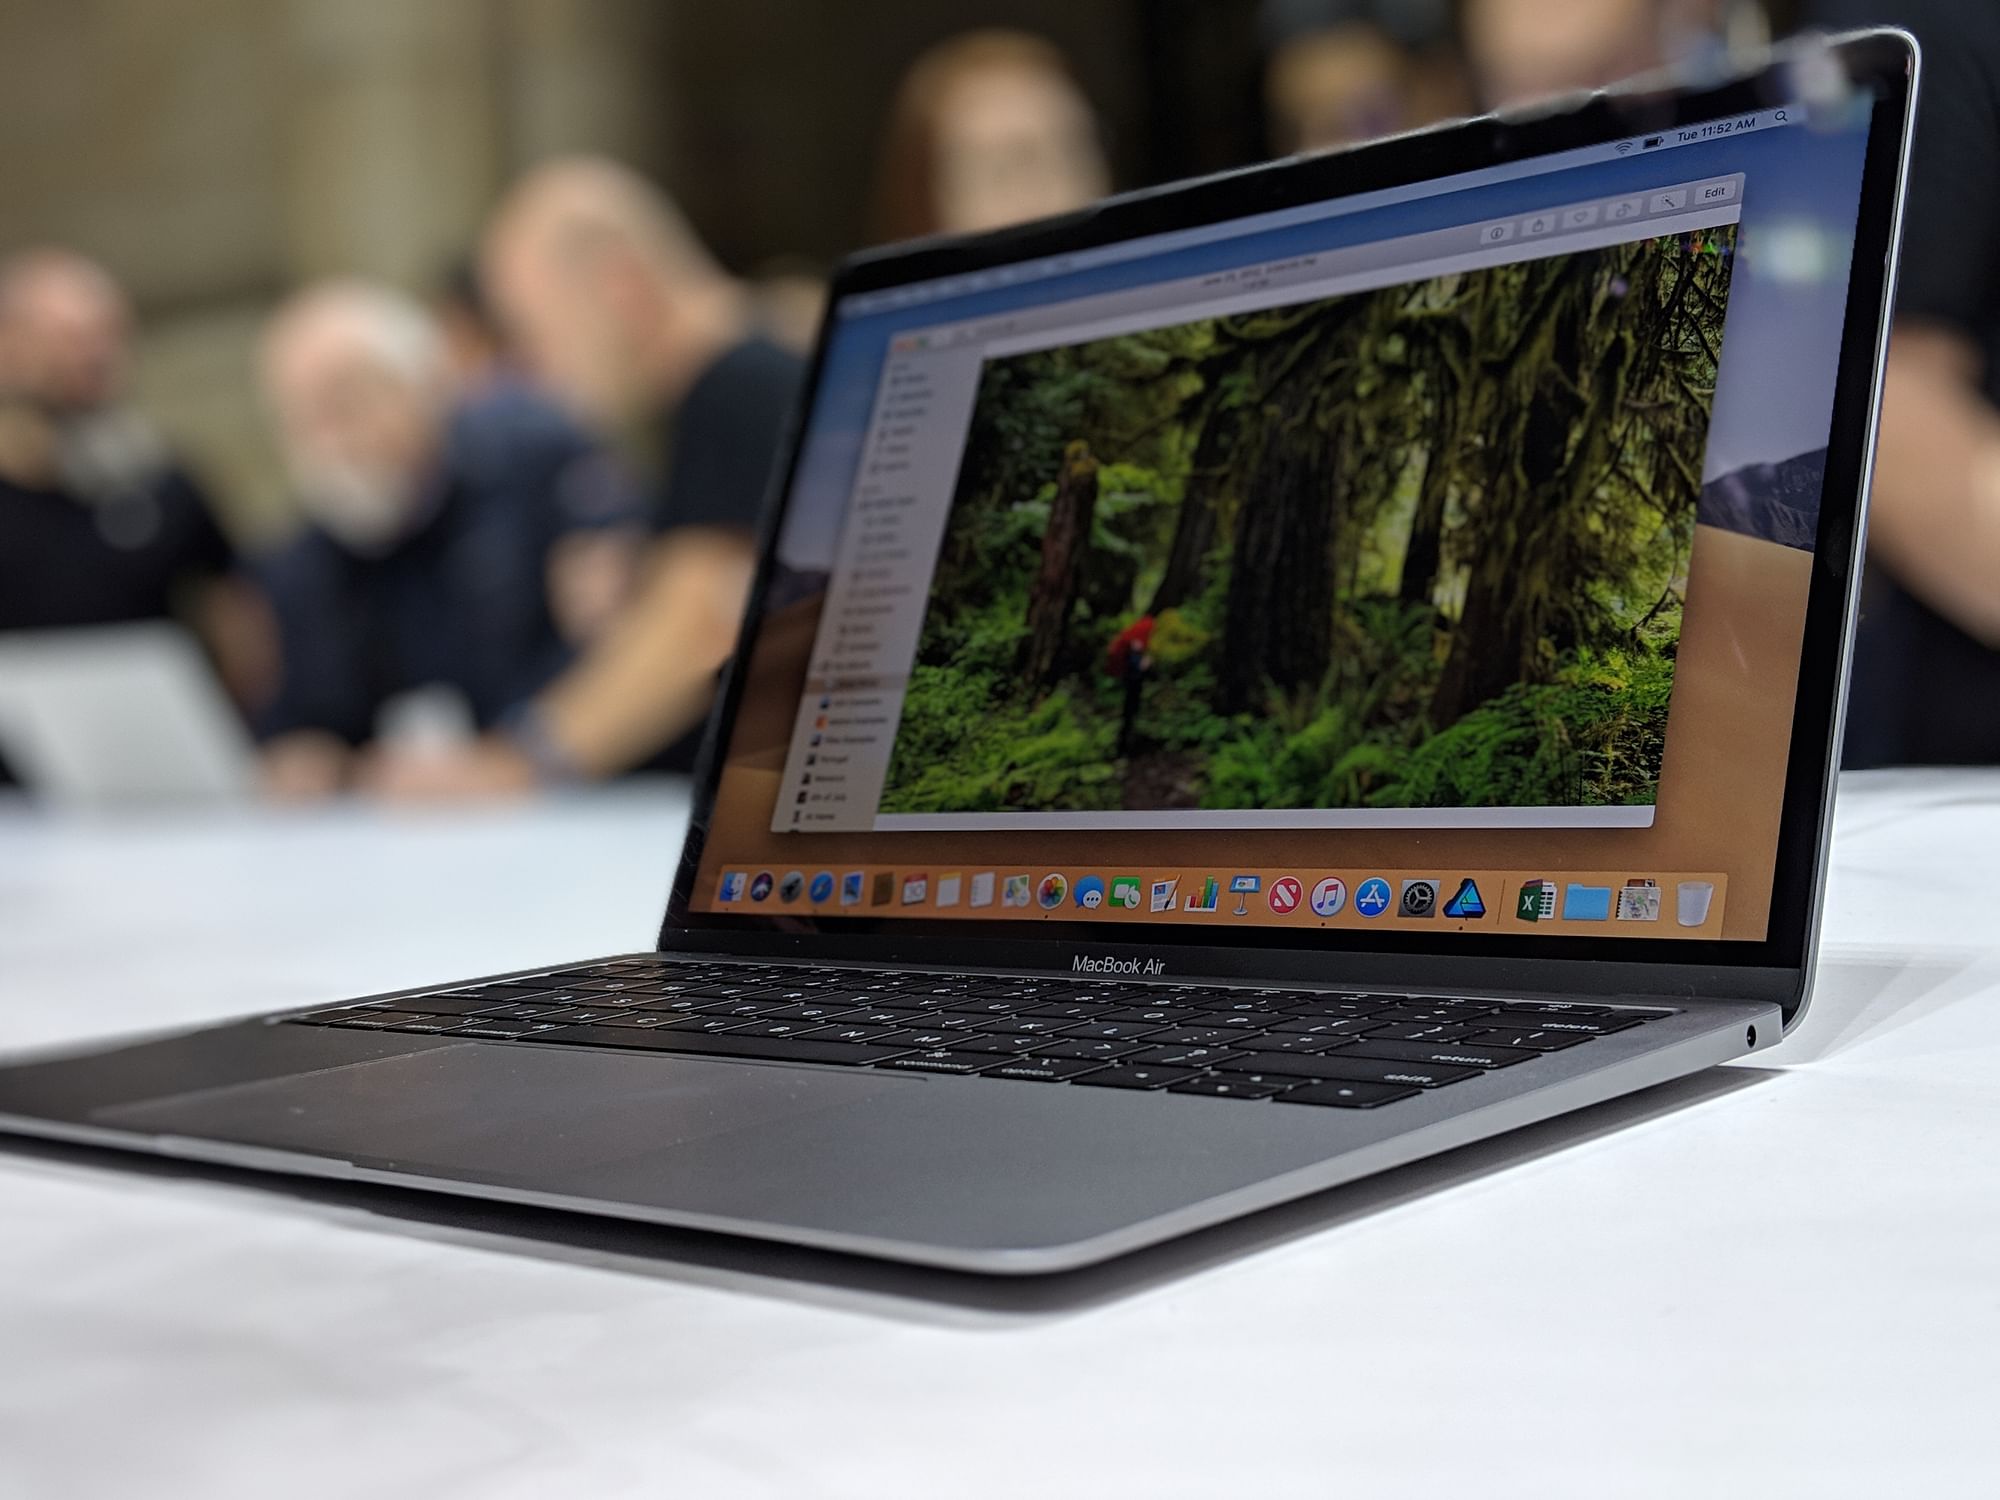 Apple calls back Macbook Pro units over a potential fire risk.